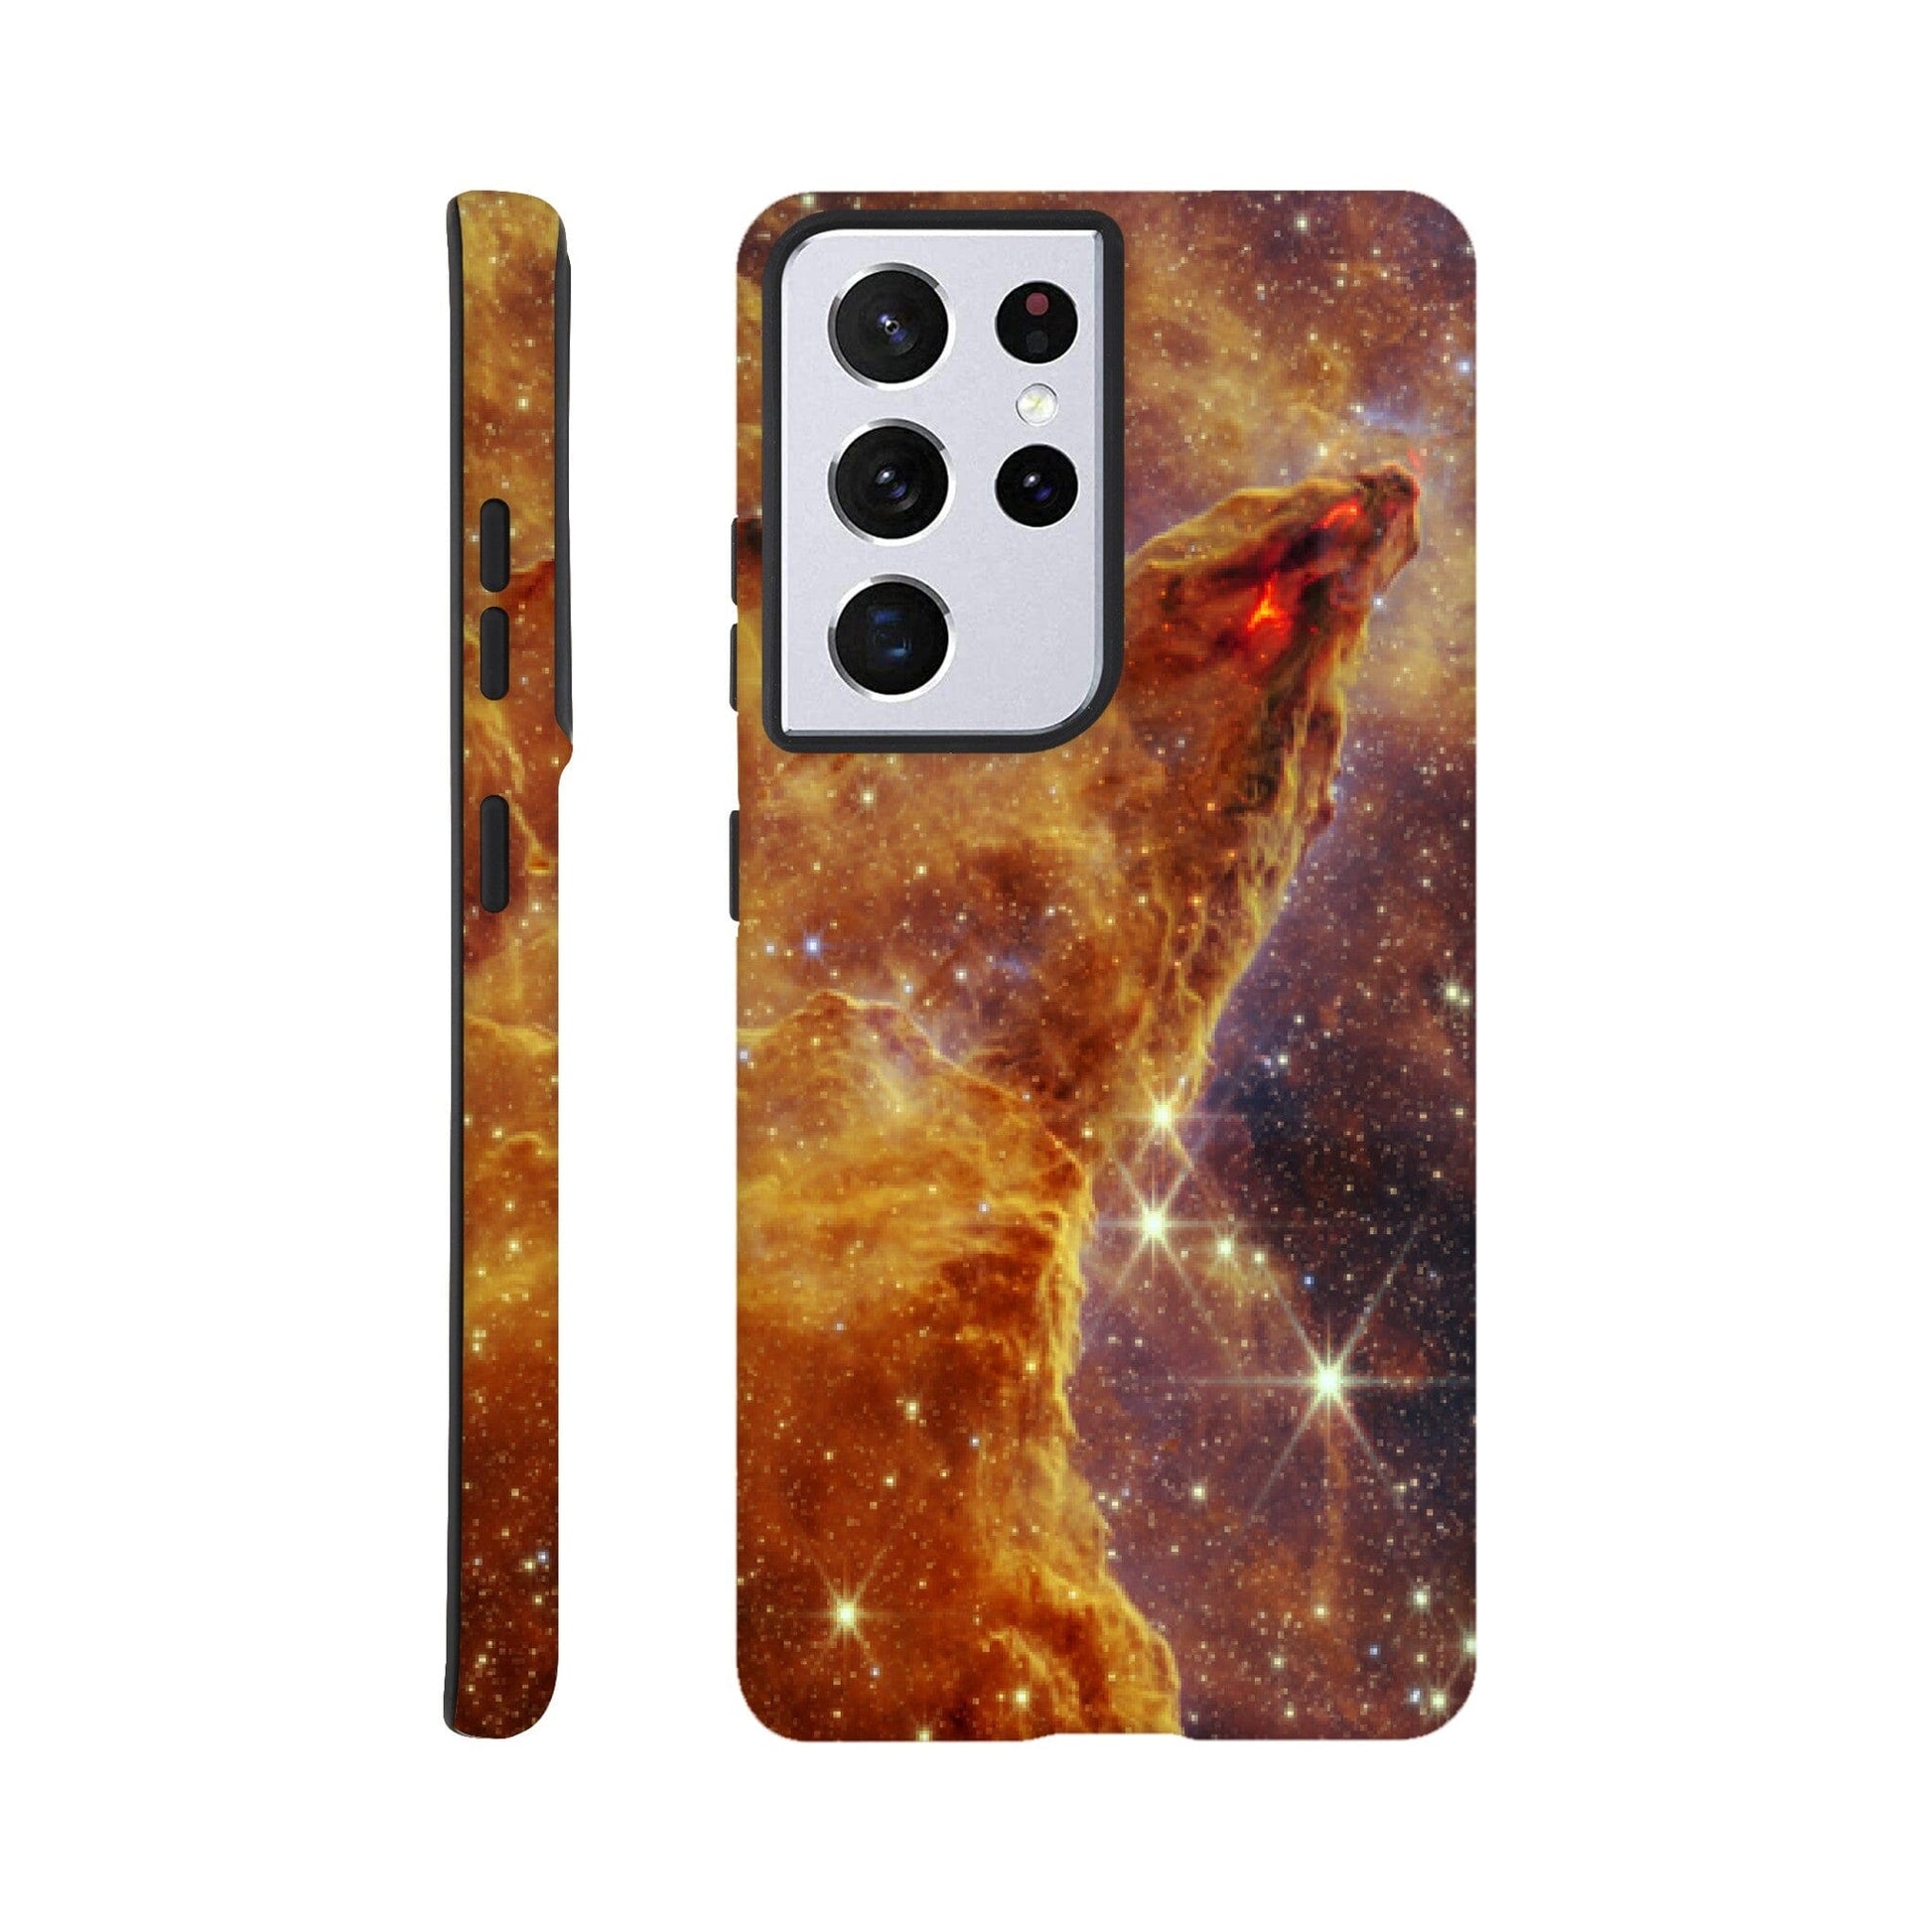 NASA - Phone Case Tough - 9. Pillars of Creation (NIRCam Image) - James Webb Space Telescope Phone Case TP Aviation Art Galaxy S21 Ultra 